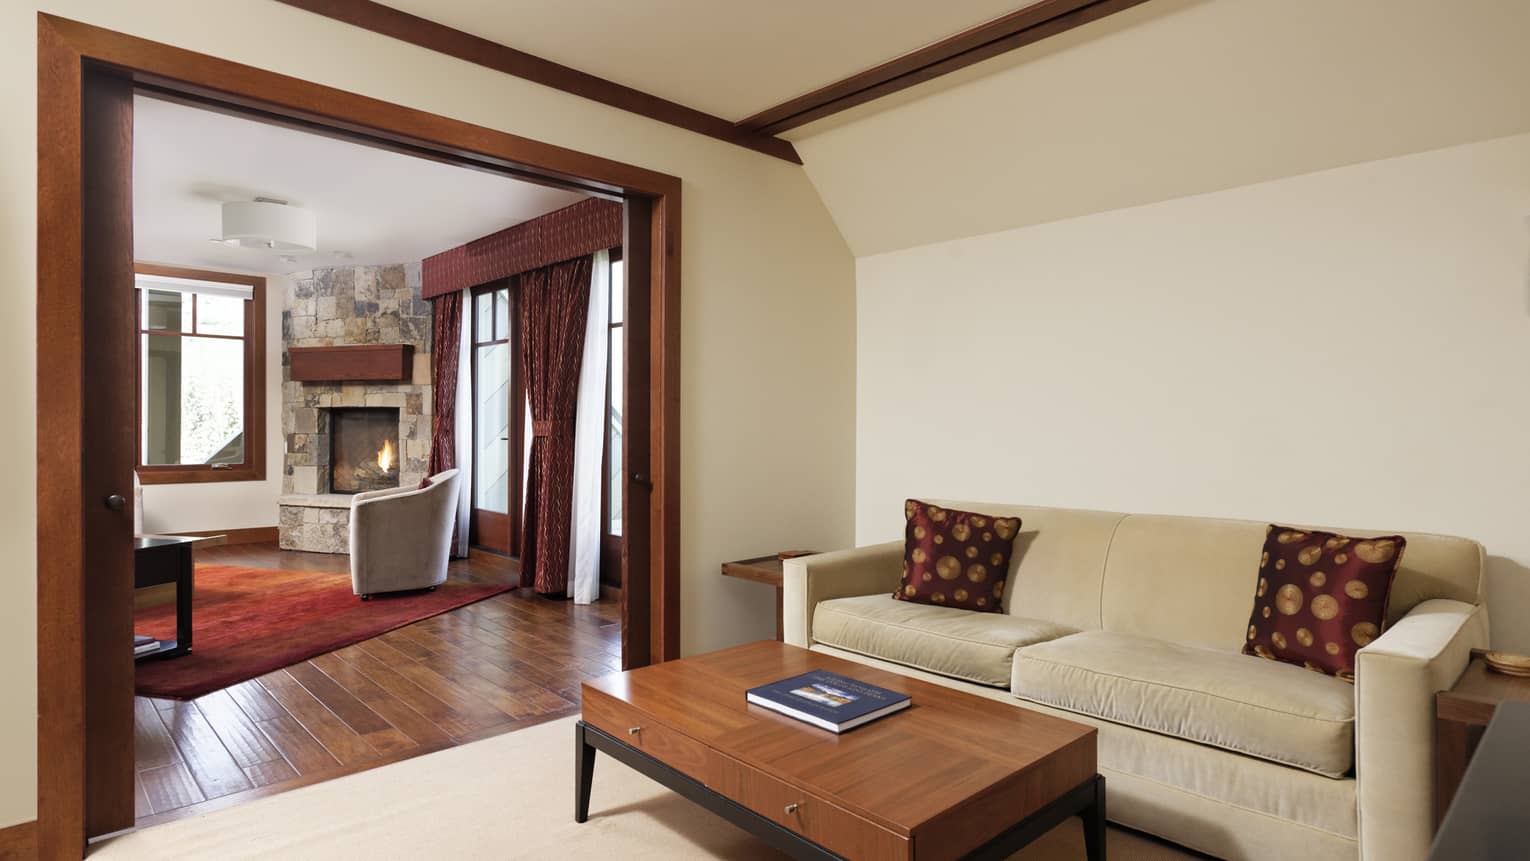 Room with cream-coloured sofa, wooden coffee table, cream walls, dark wooden molding